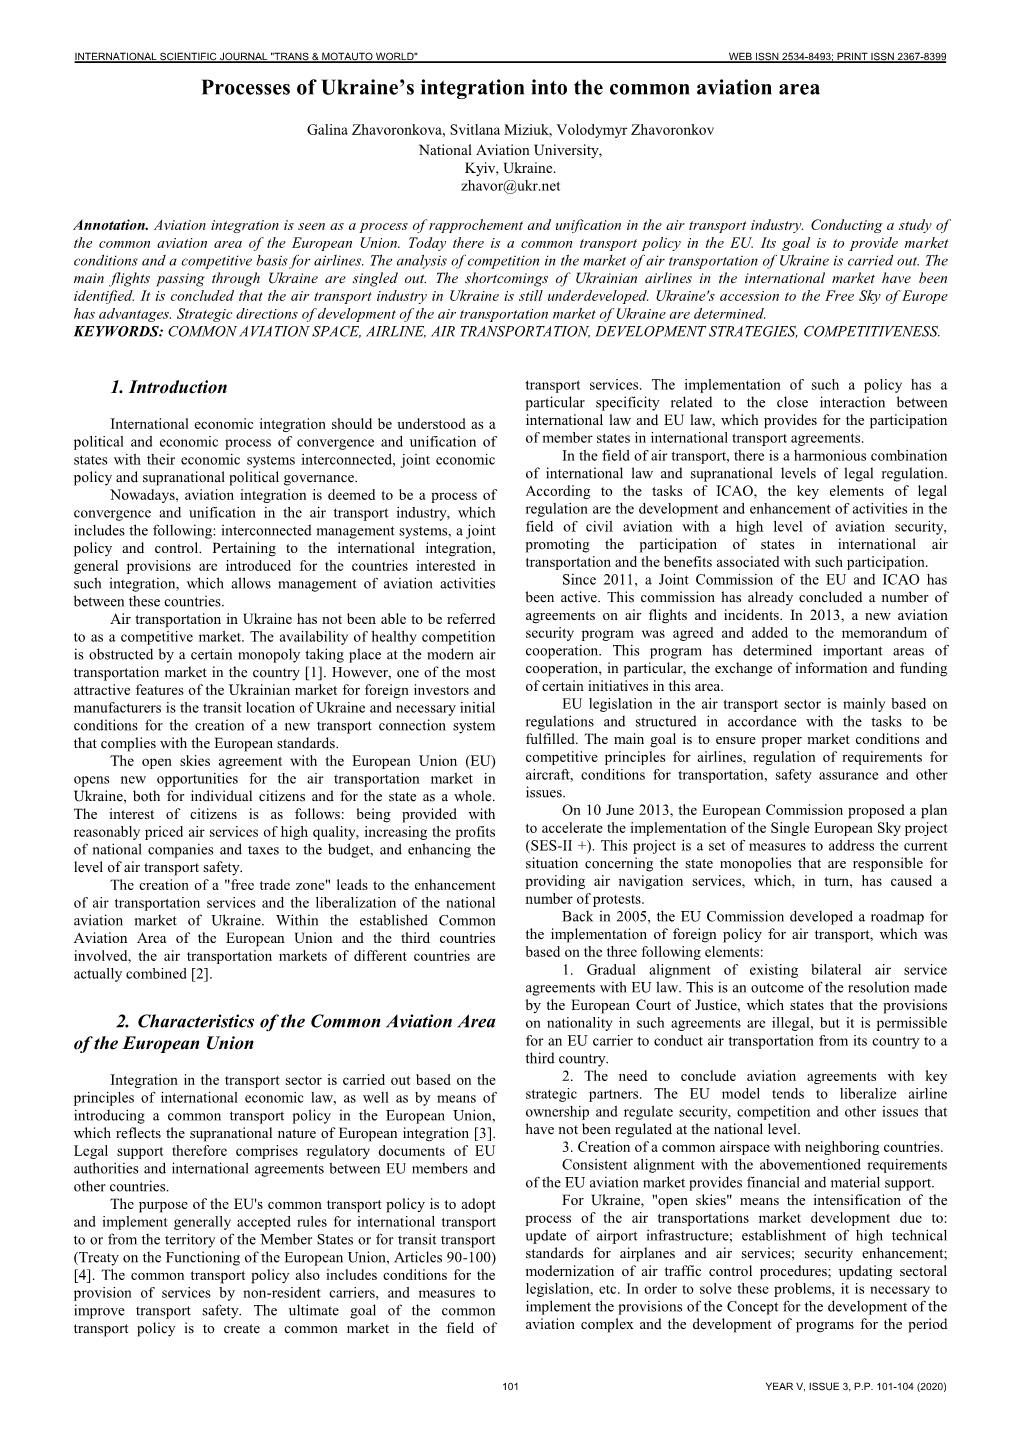 Processes of Ukraine's Integration Into the Common Aviation Area